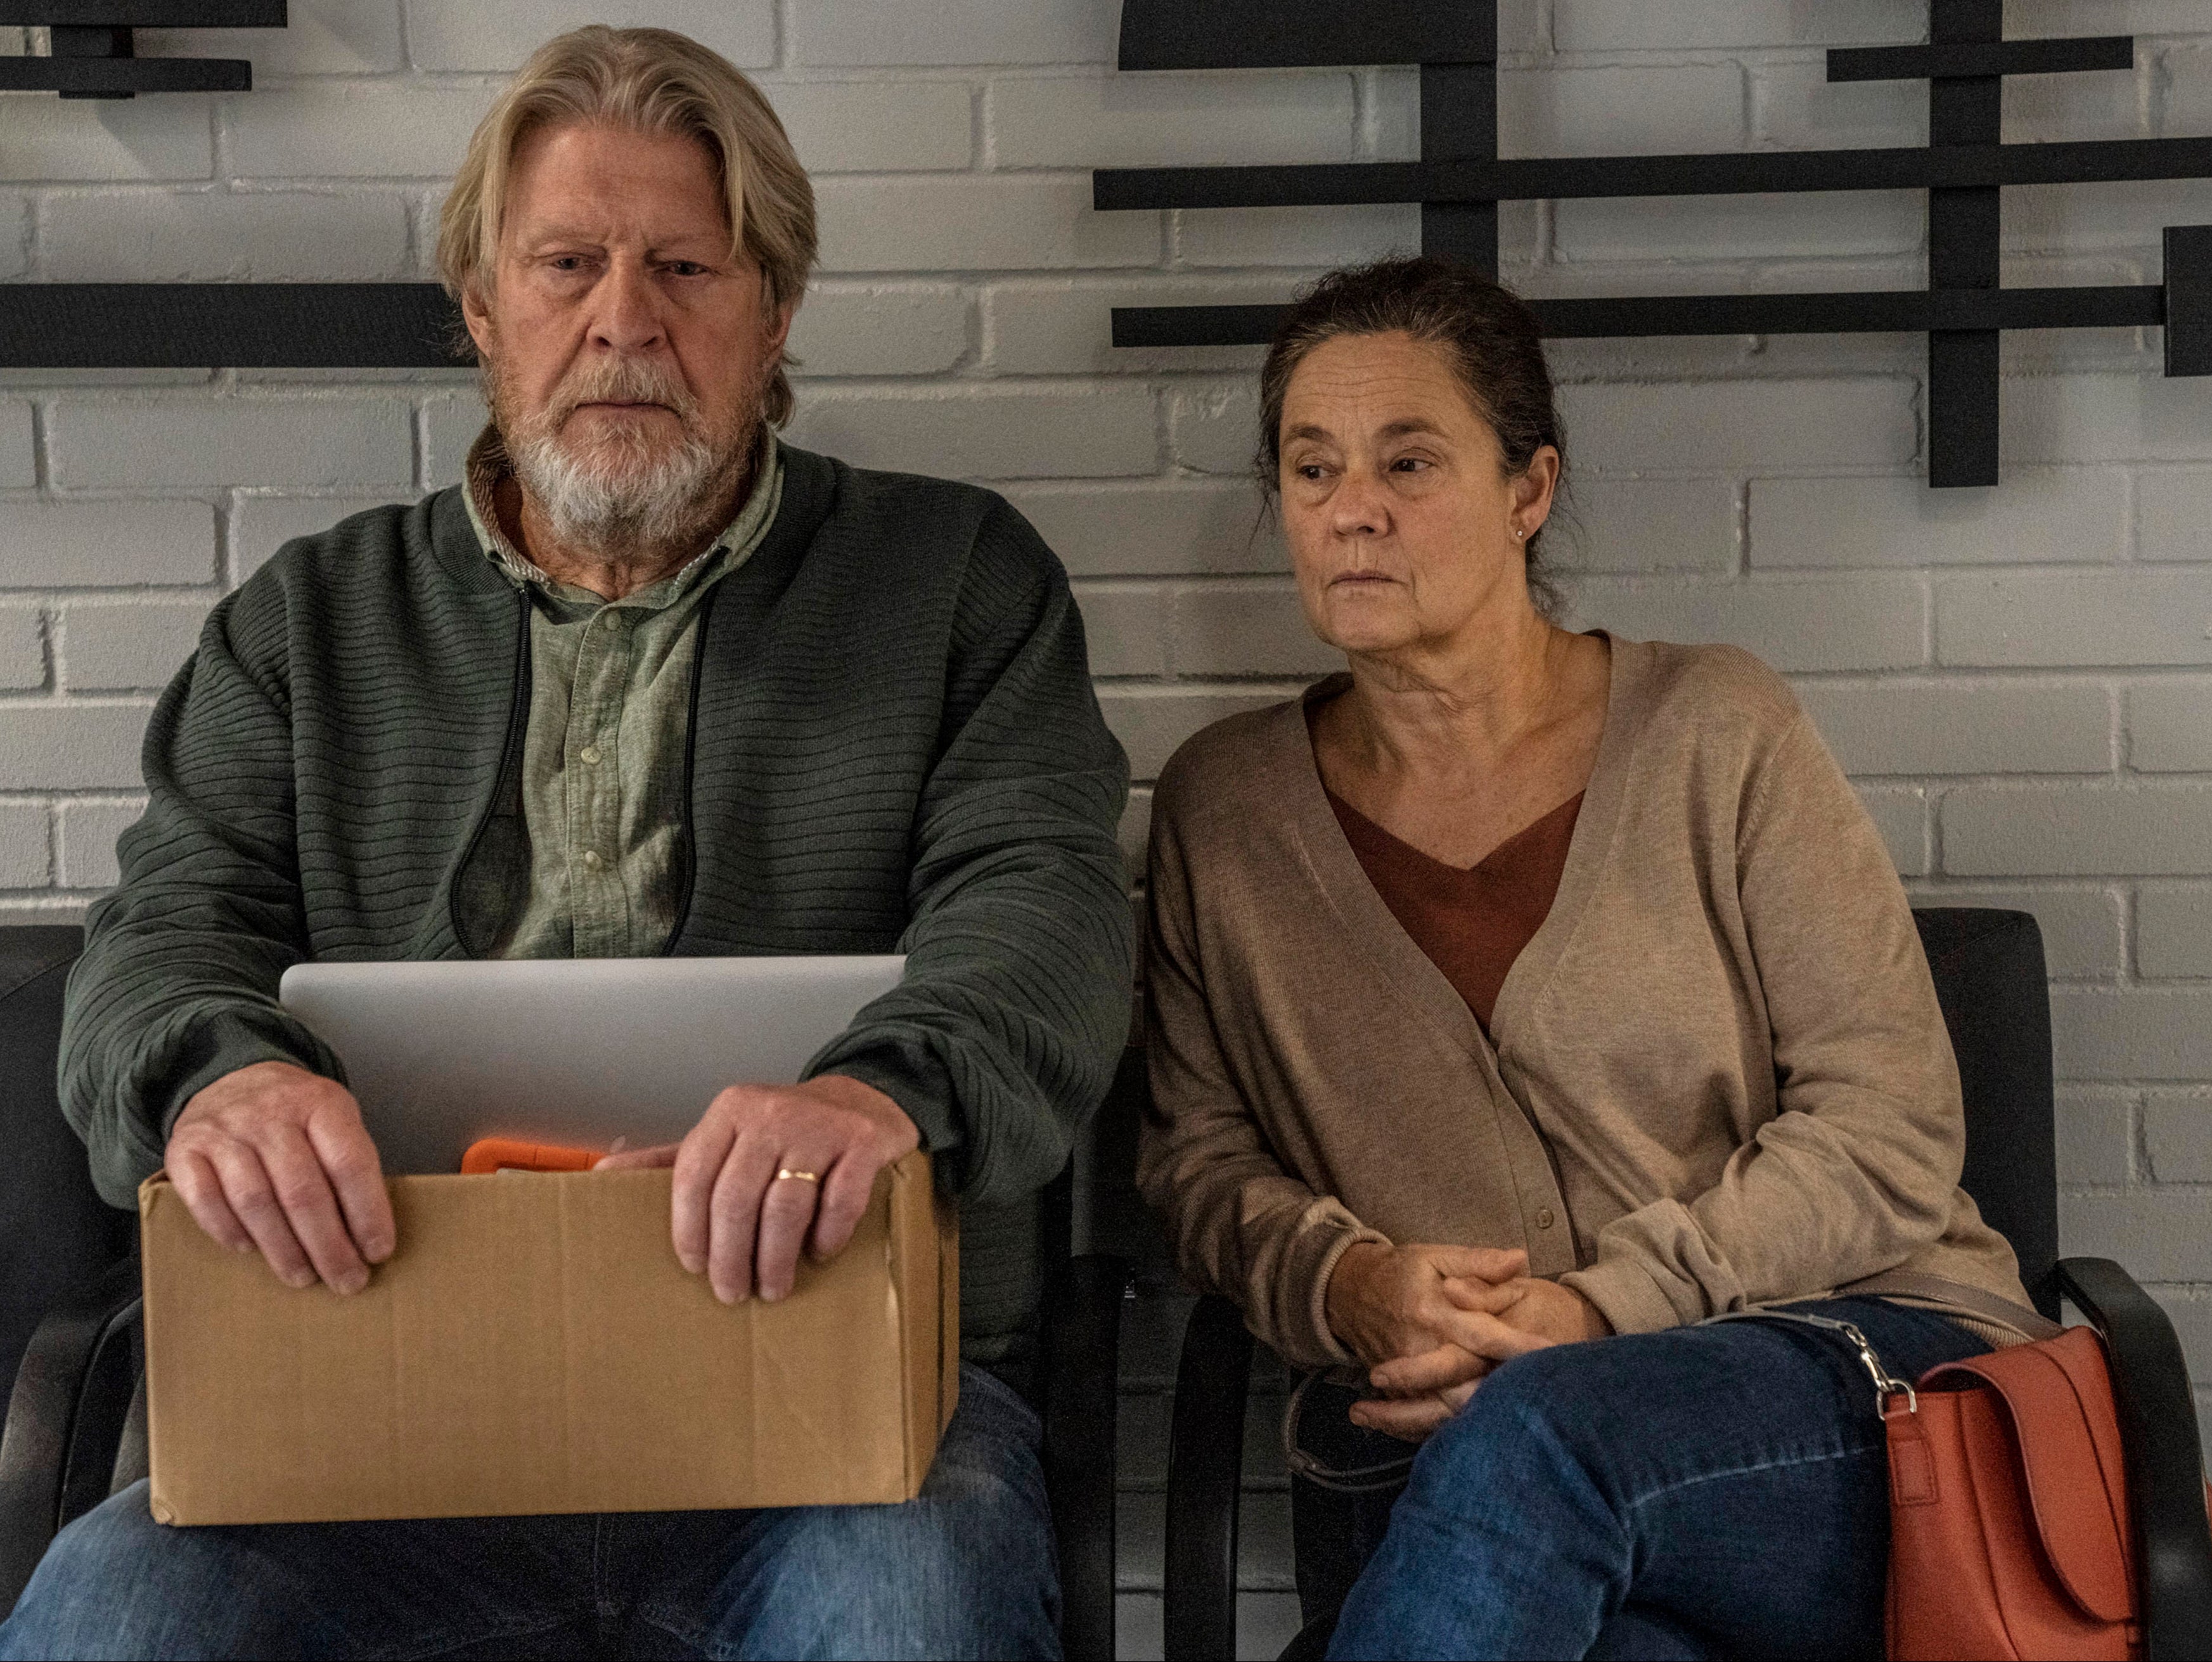 Rolf Lassgård and Pernilla August play Kim Wall’s parents